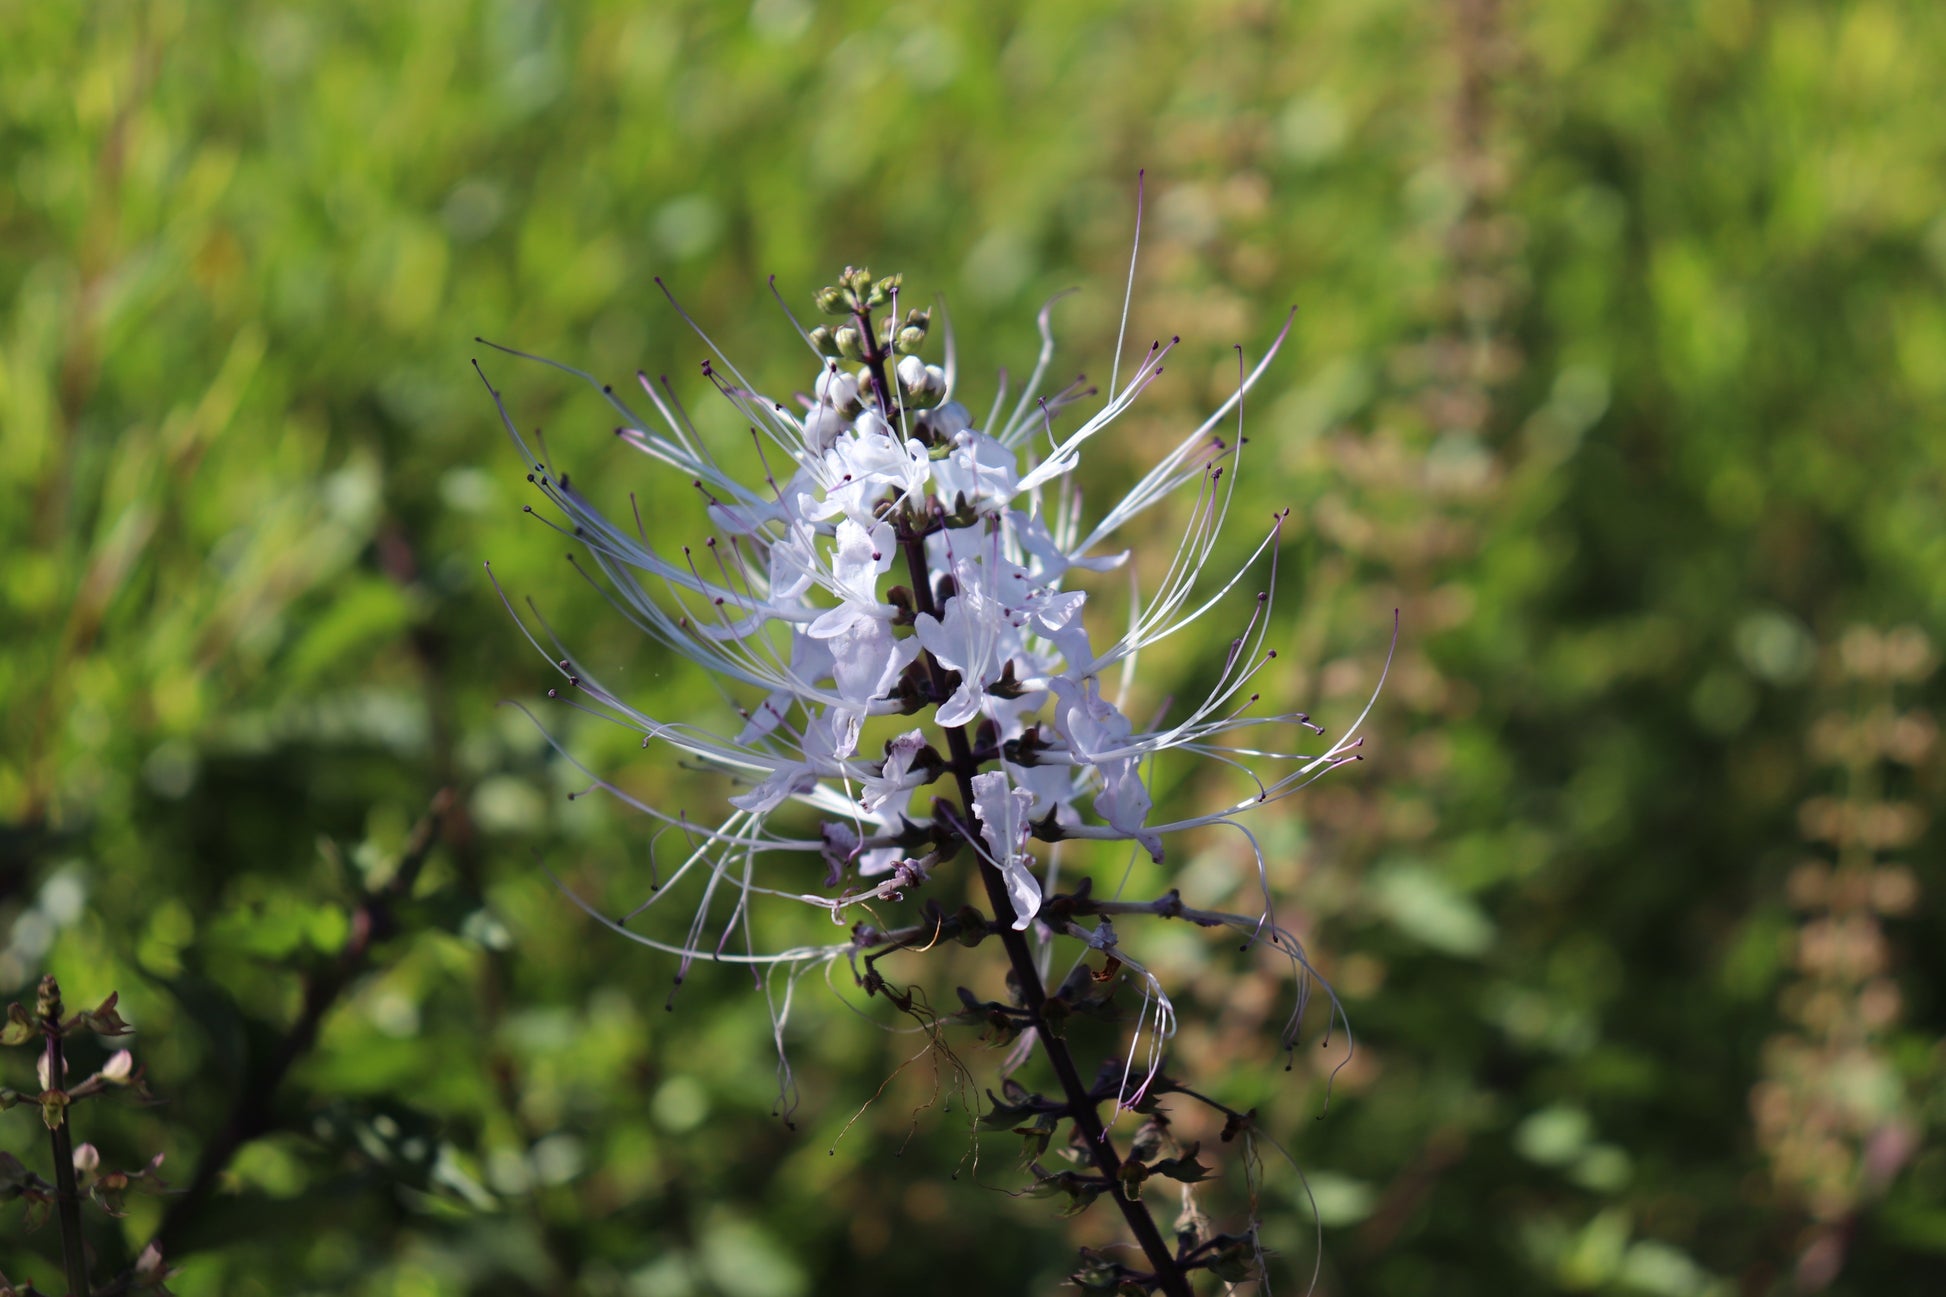 Close up photo of white whispy flower of the Orthosiphon aristatus plant